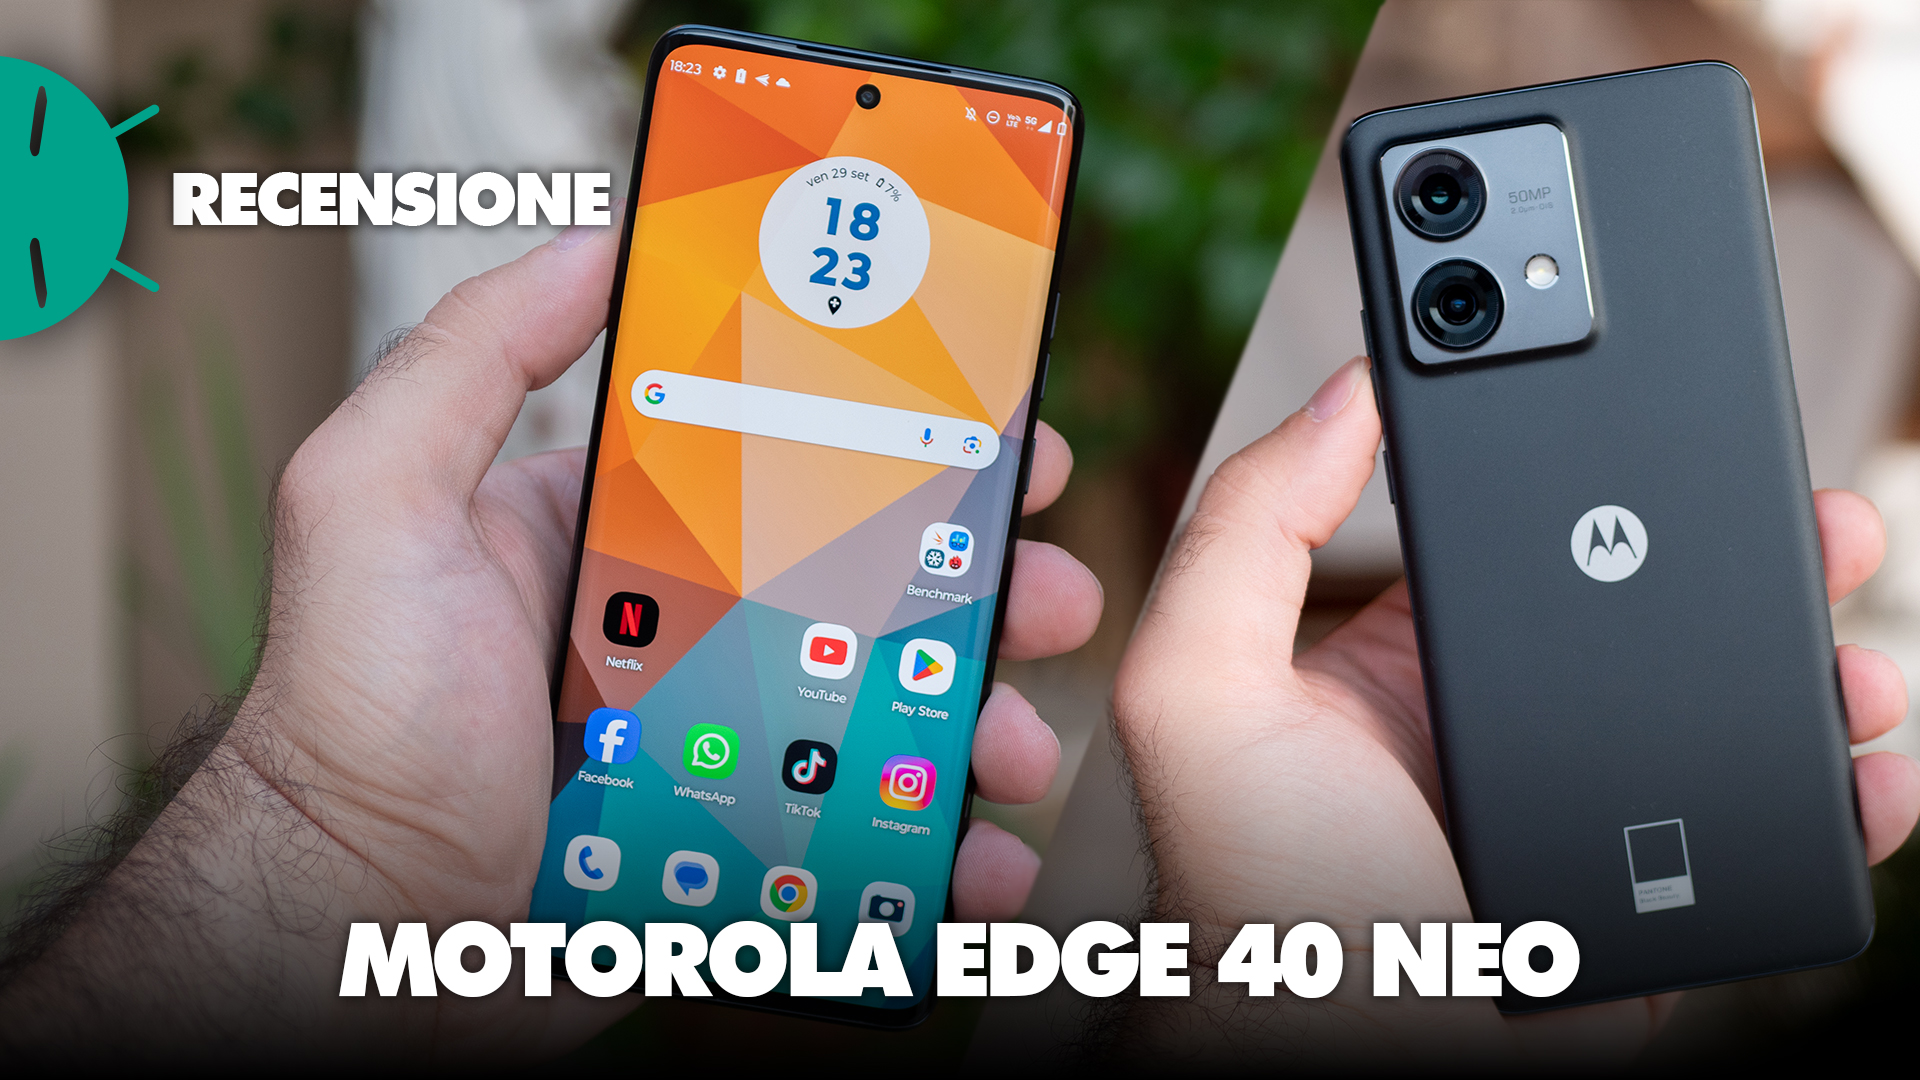 Motorola Edge 40 Neo Unboxing and First Impressions - Gizmochina